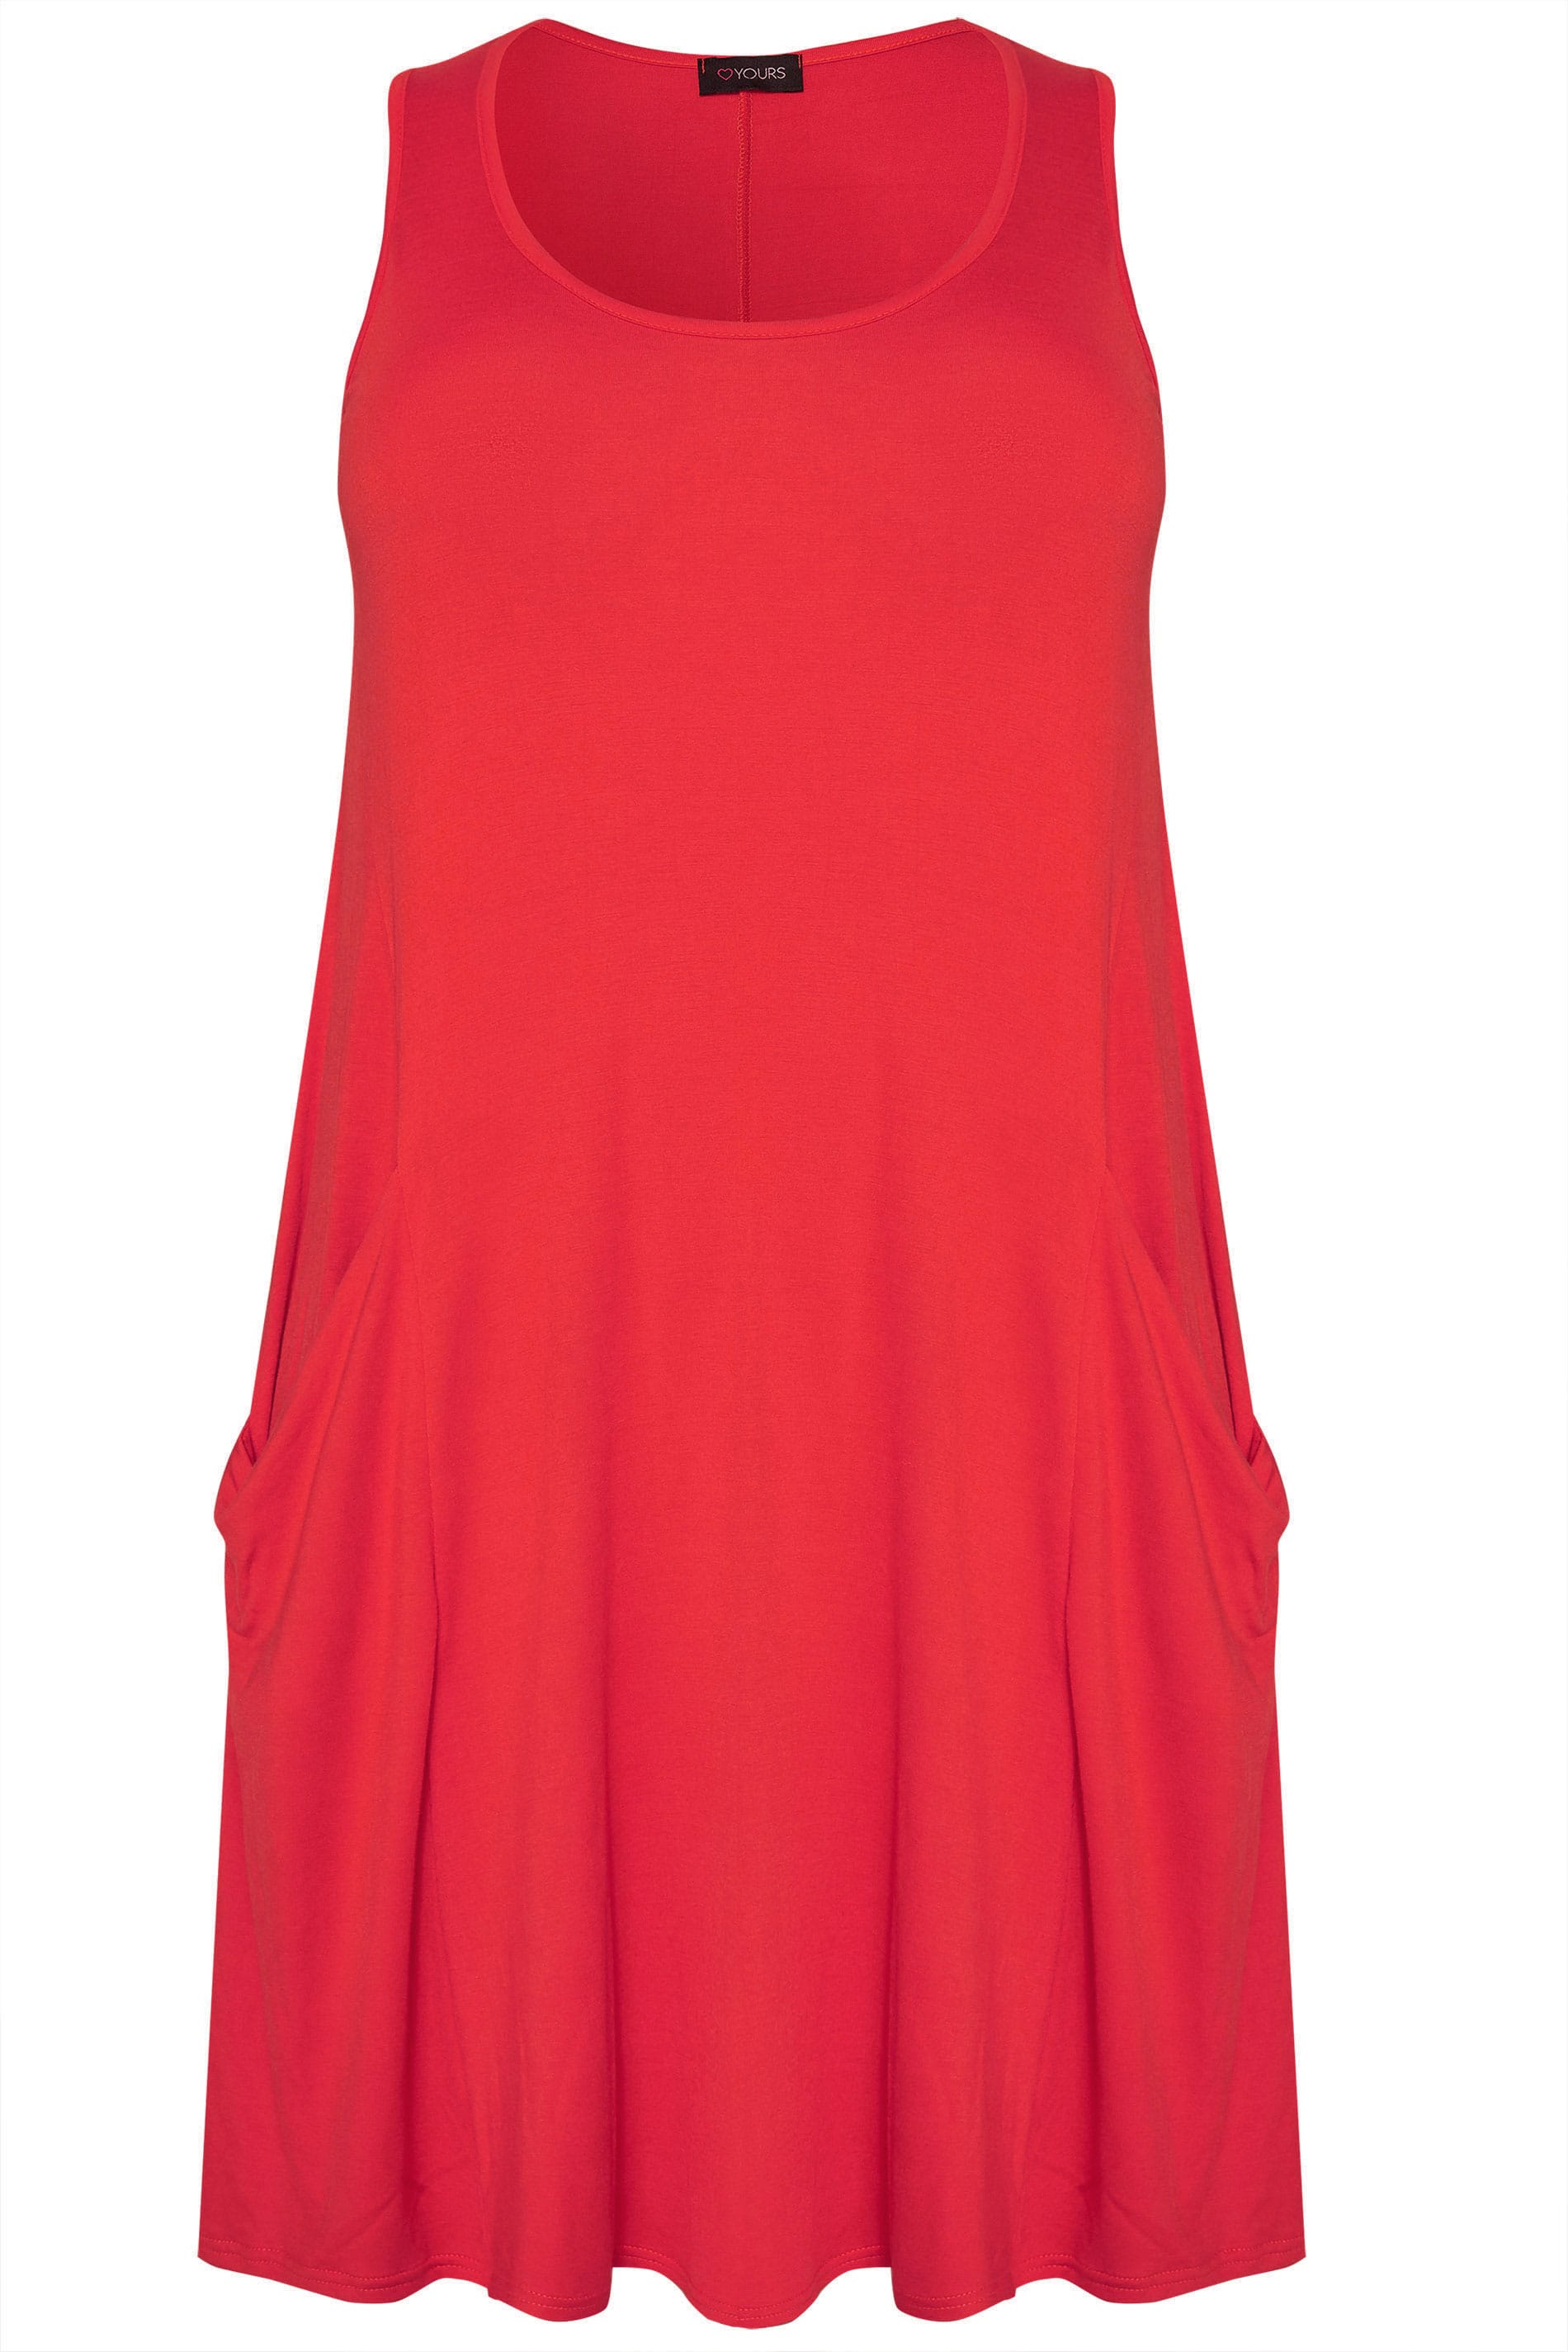 Red Sleeveless Drape Pocket Dress | Yours Clothing